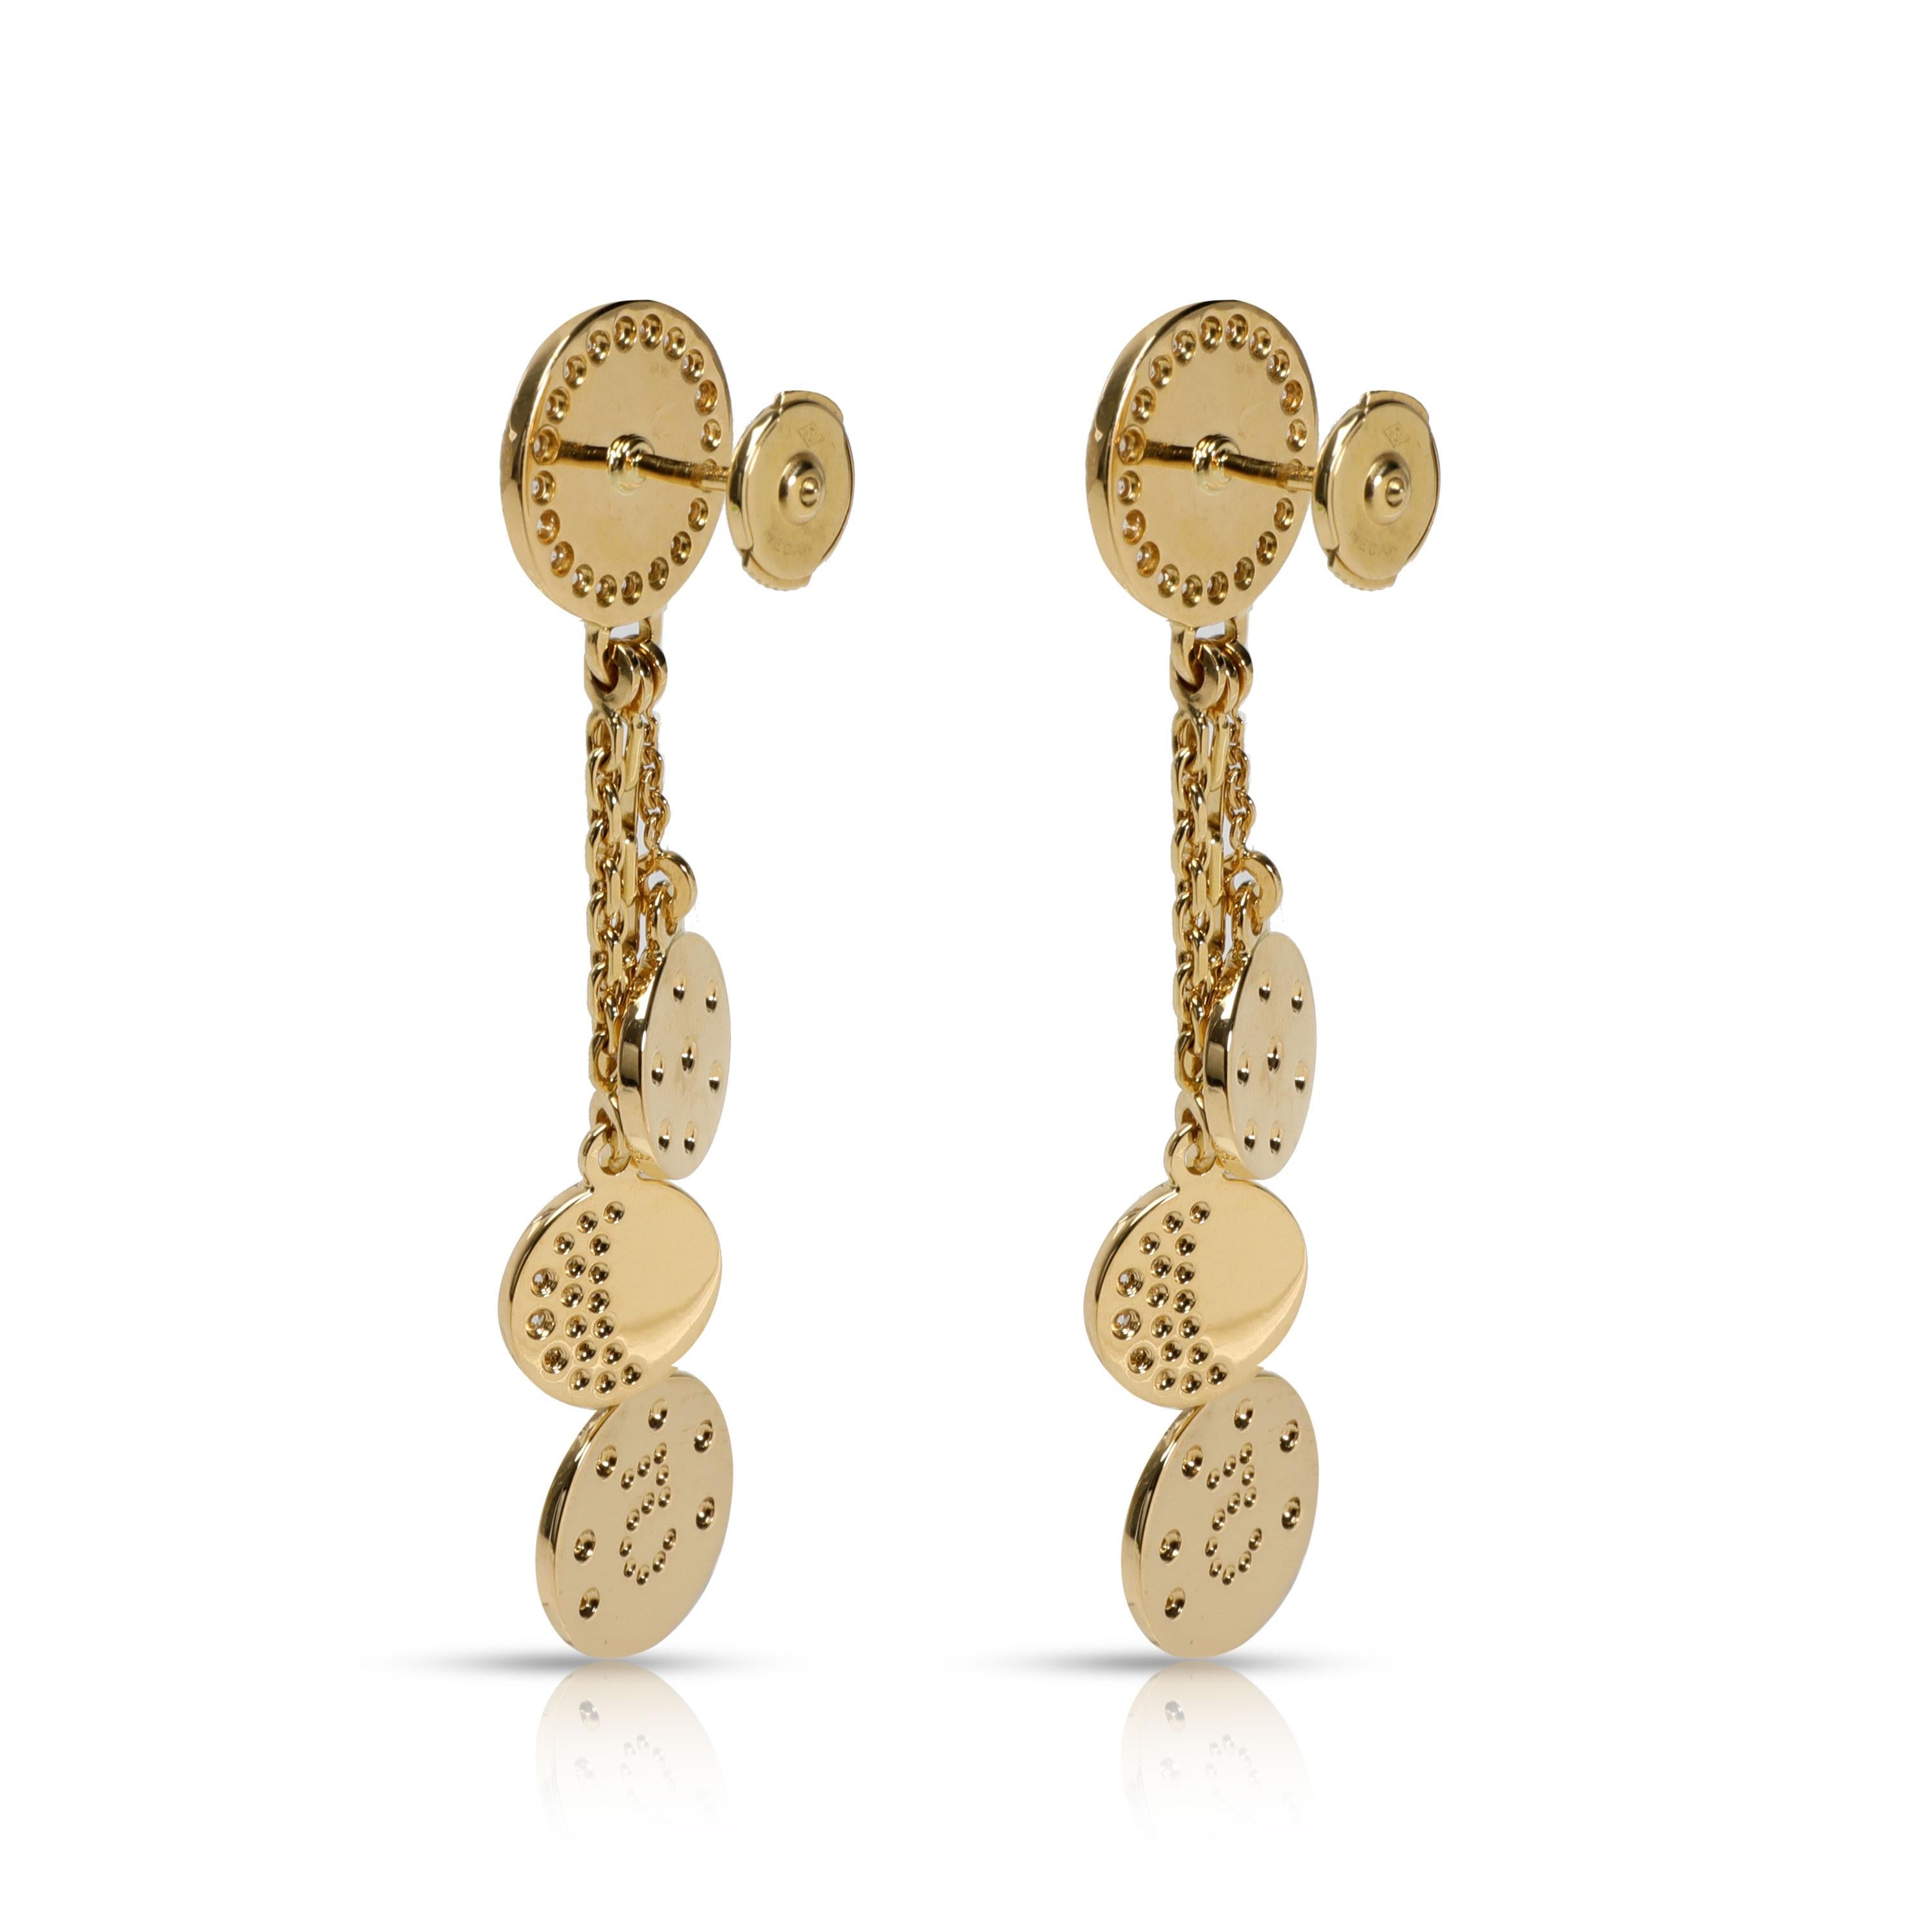 Round Cut Chanel Comete Diamond Earrings in 18 Karat Yellow Gold 1.00 Carat